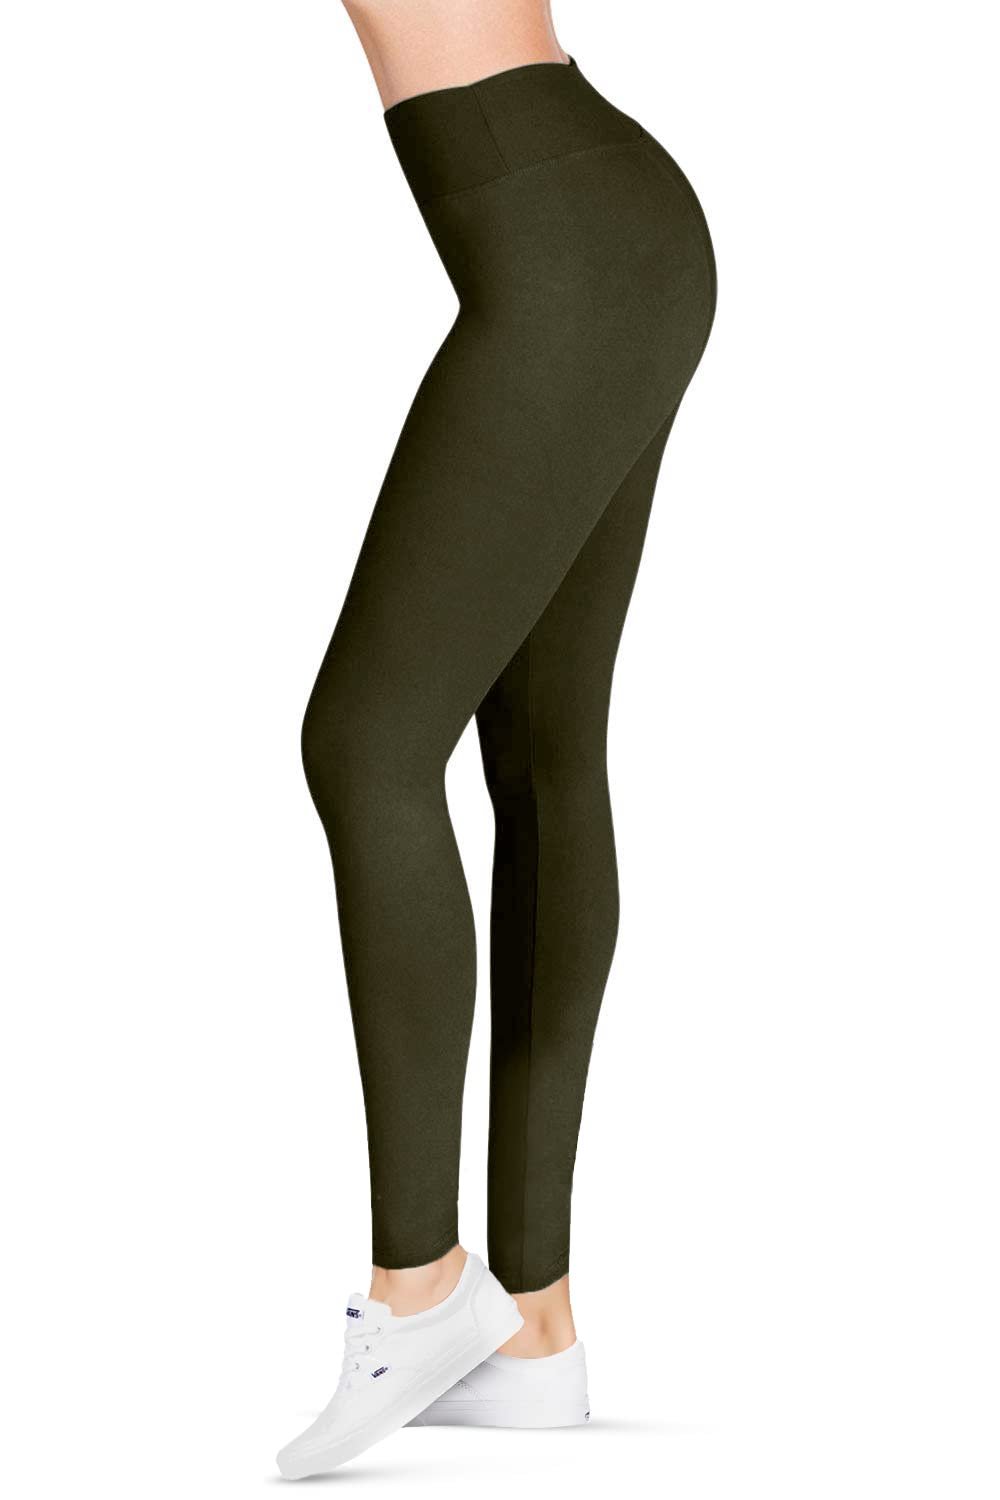 Dark Green Plus Size Leggings - A Girl Exercising